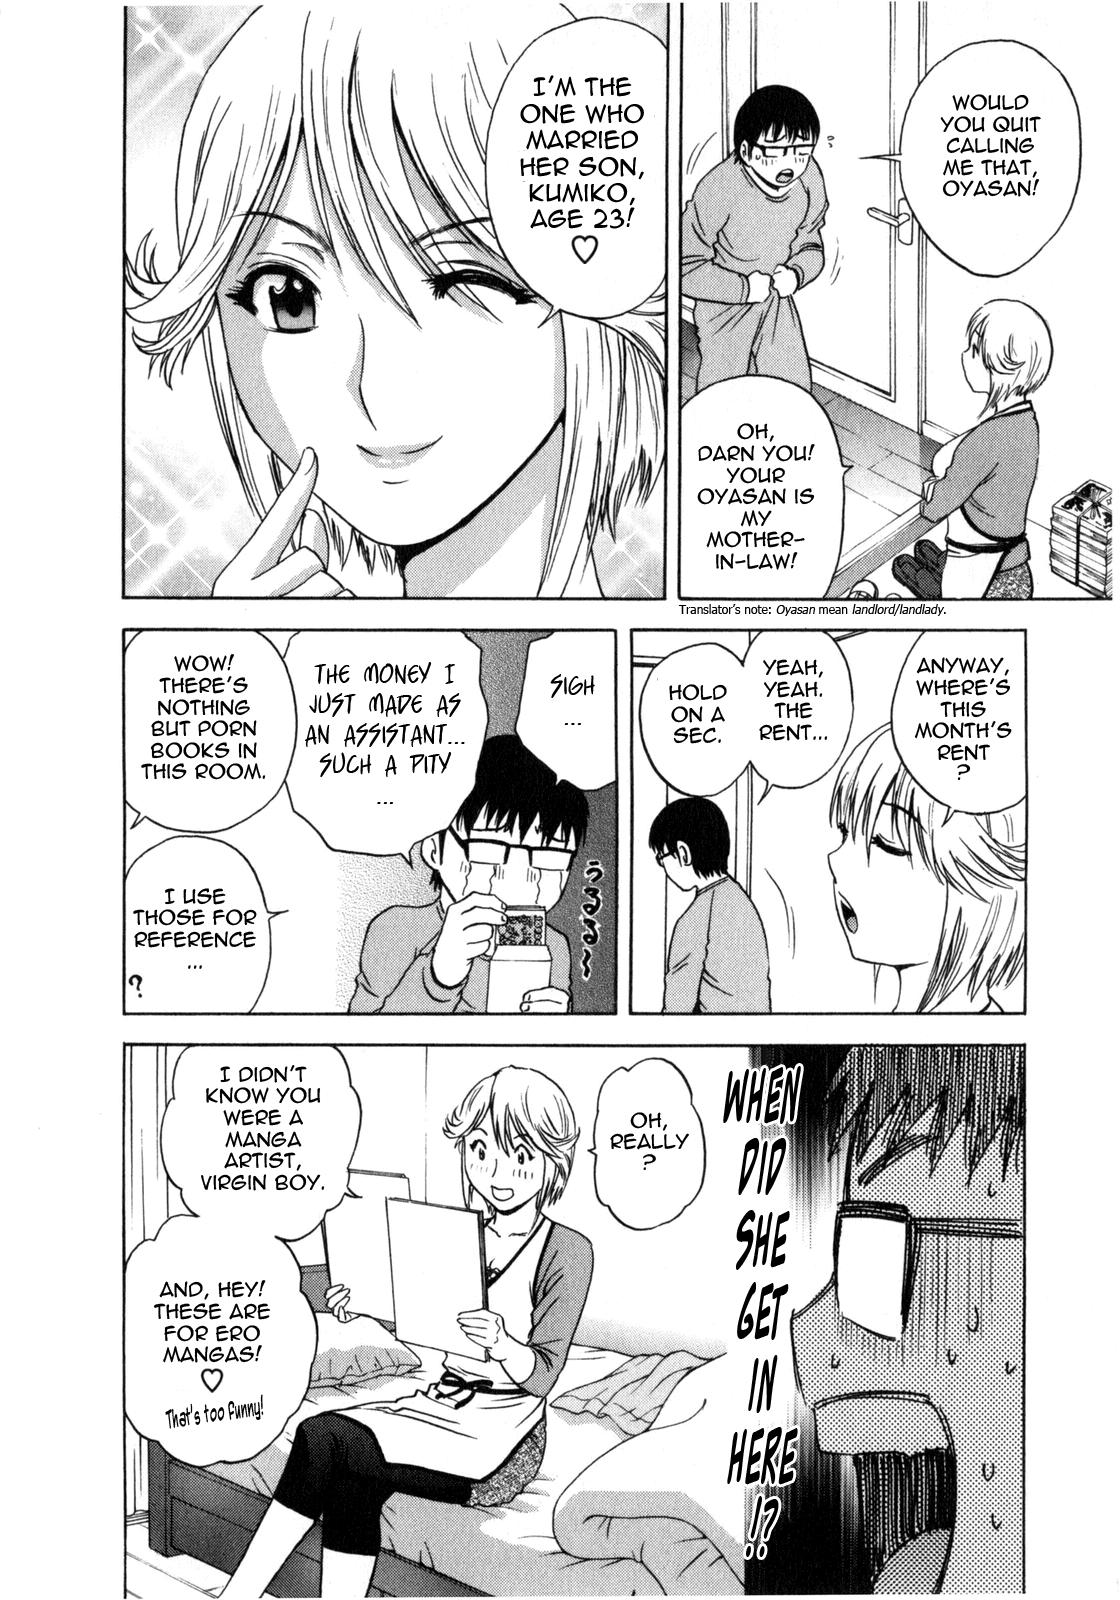 [Hidemaru] Life with Married Women Just Like a Manga 1 - Ch. 1-9 [English] {Tadanohito} 29